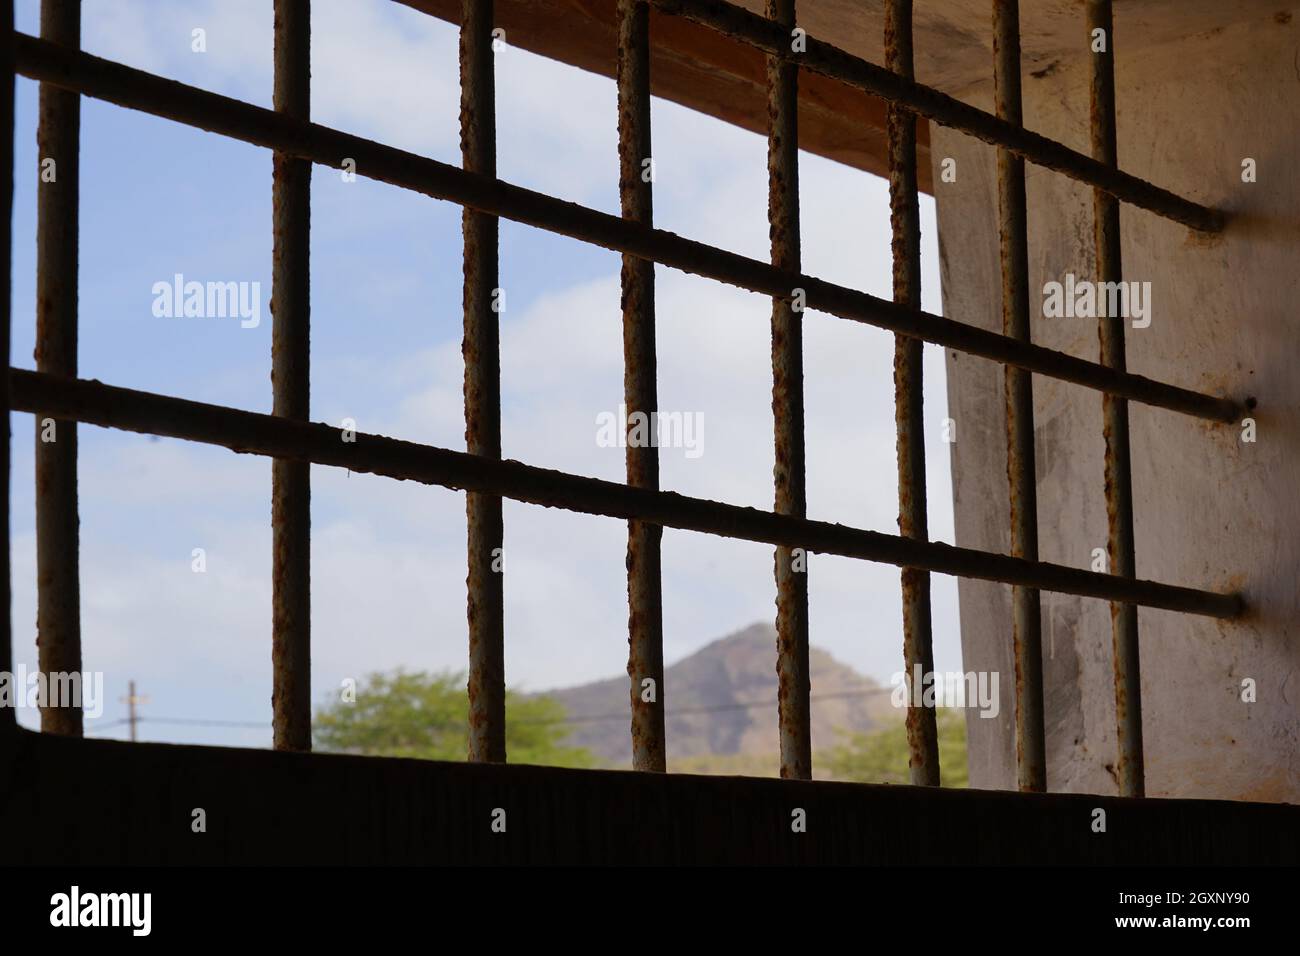 Barred window of a communal cell, bathroom, Tarrafal concentration camp, Santiago Island, Republic of Cape Verde Stock Photo